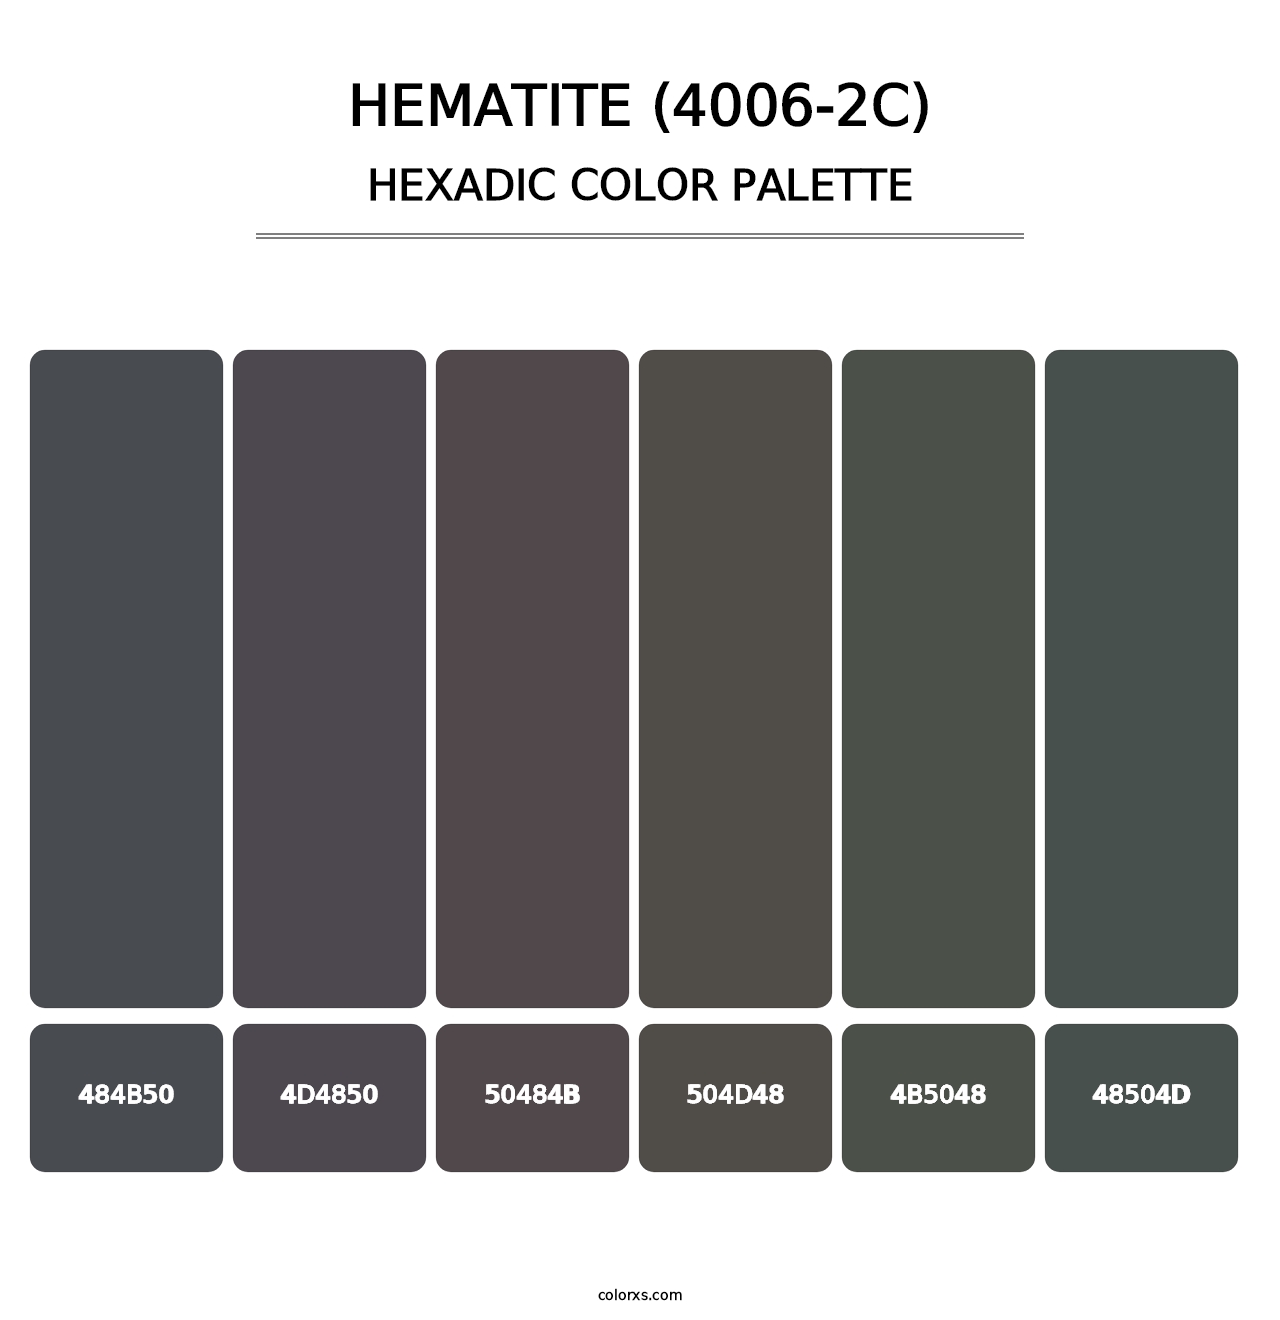 Hematite (4006-2C) - Hexadic Color Palette